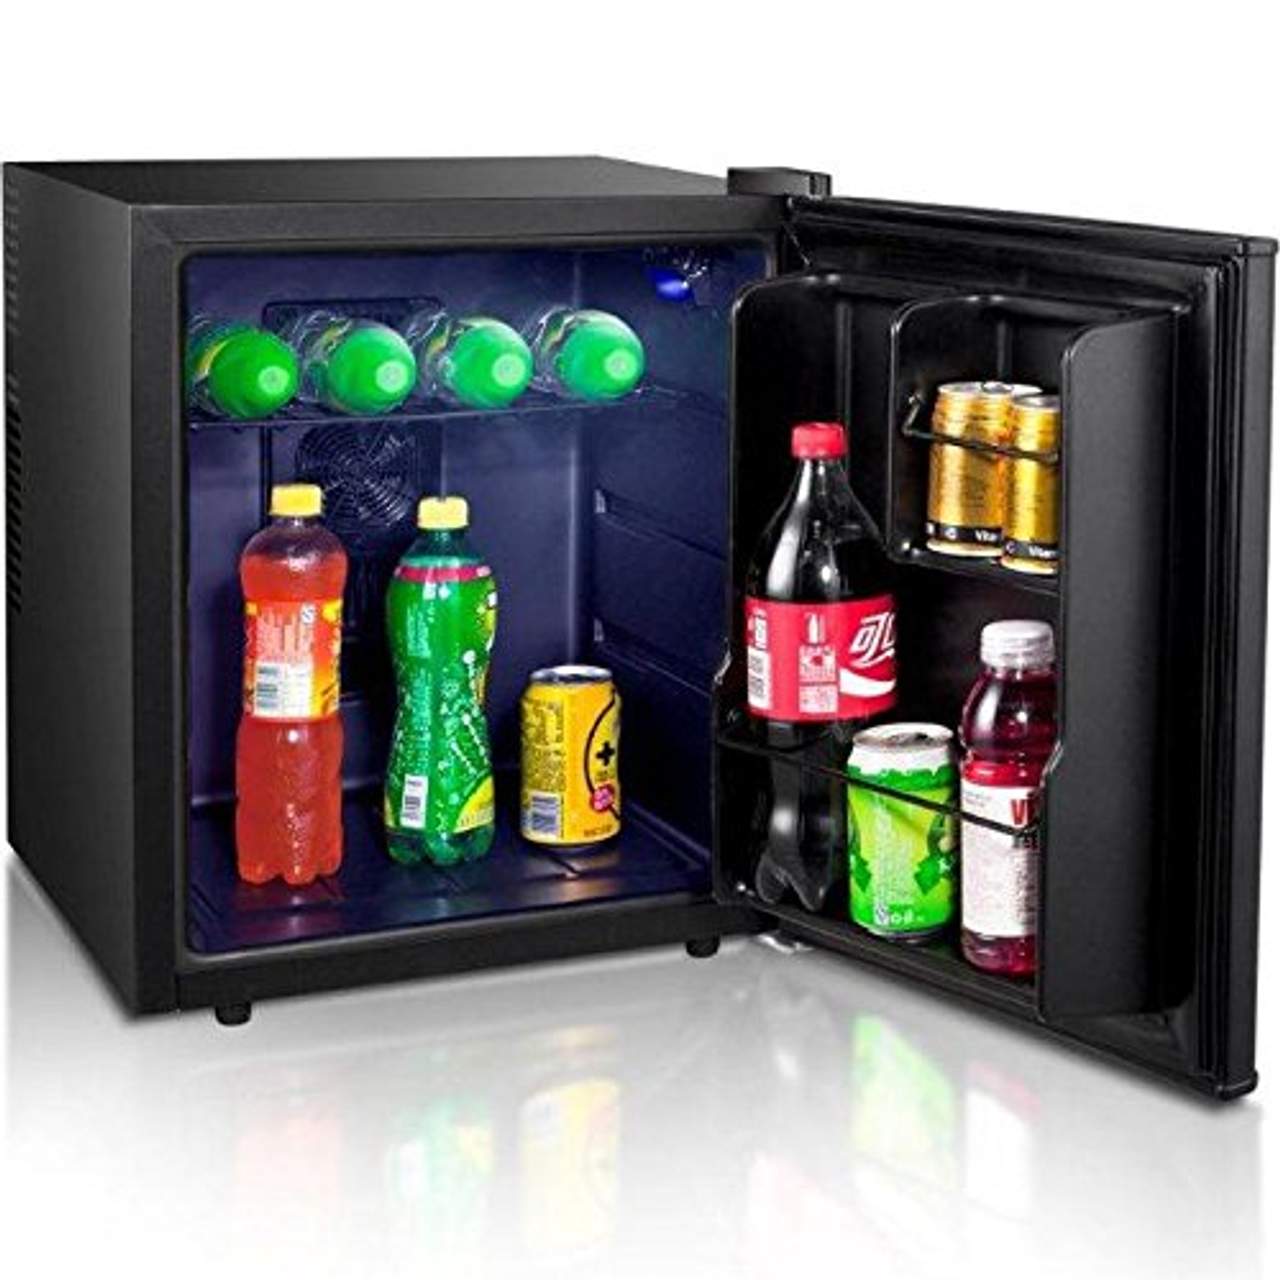 Syntrox Germany  50 Liter geräuscharmer Mini Kühlschrank leiser Hotelkühlschrank